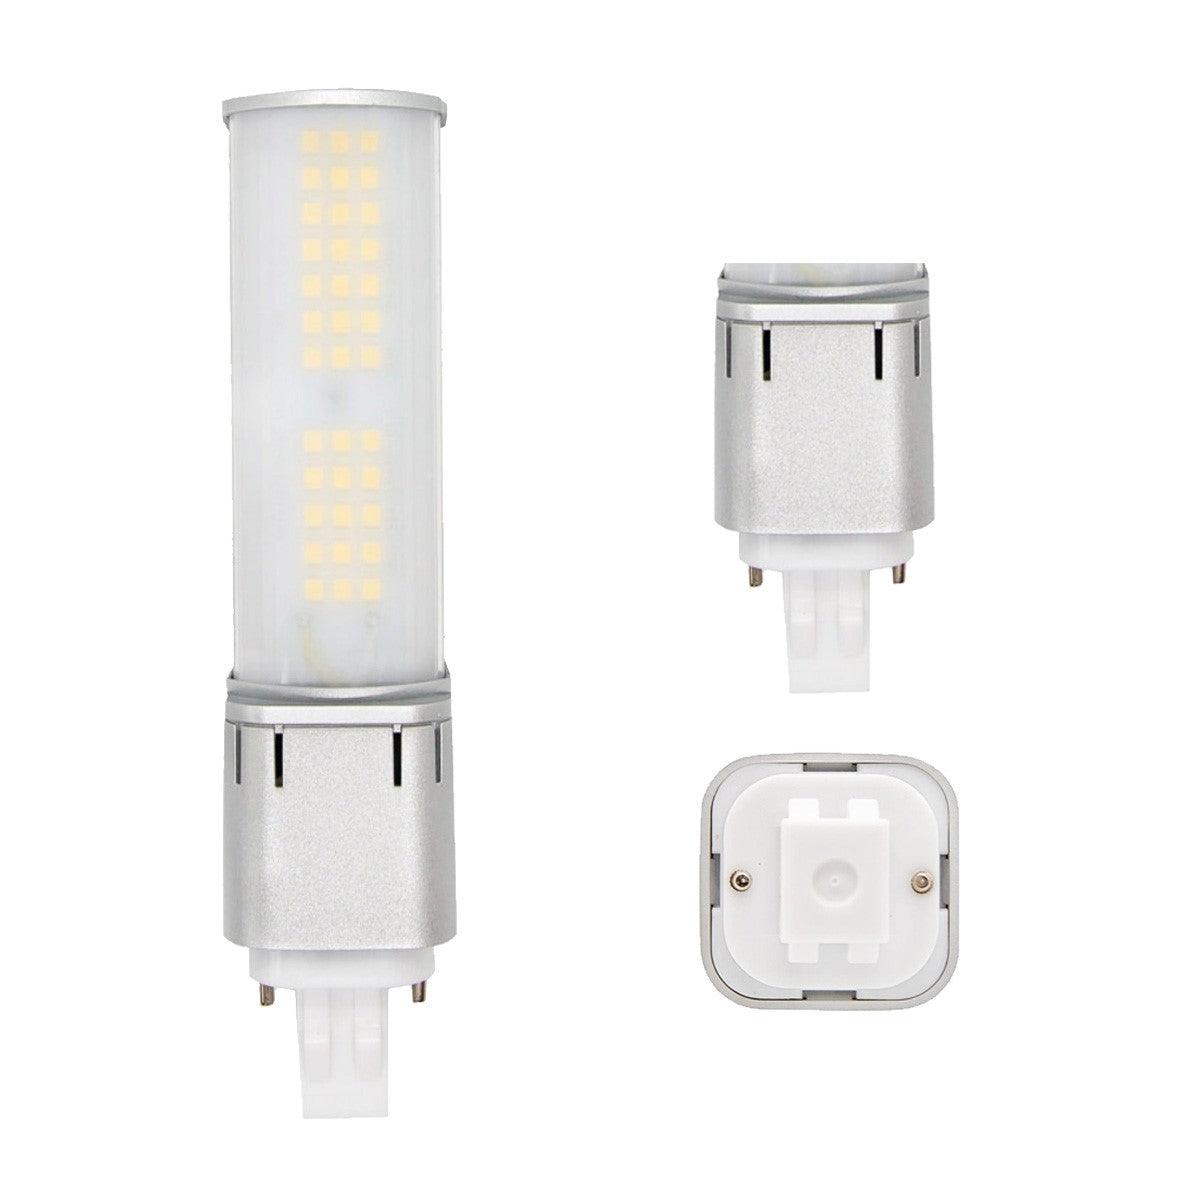 2 pin PL LED Bulb, 7 Watt 870 Lumens, 3500K, Horizontal, Replaces 13W CFL, GX23 Base-2, Direct Or Bypass